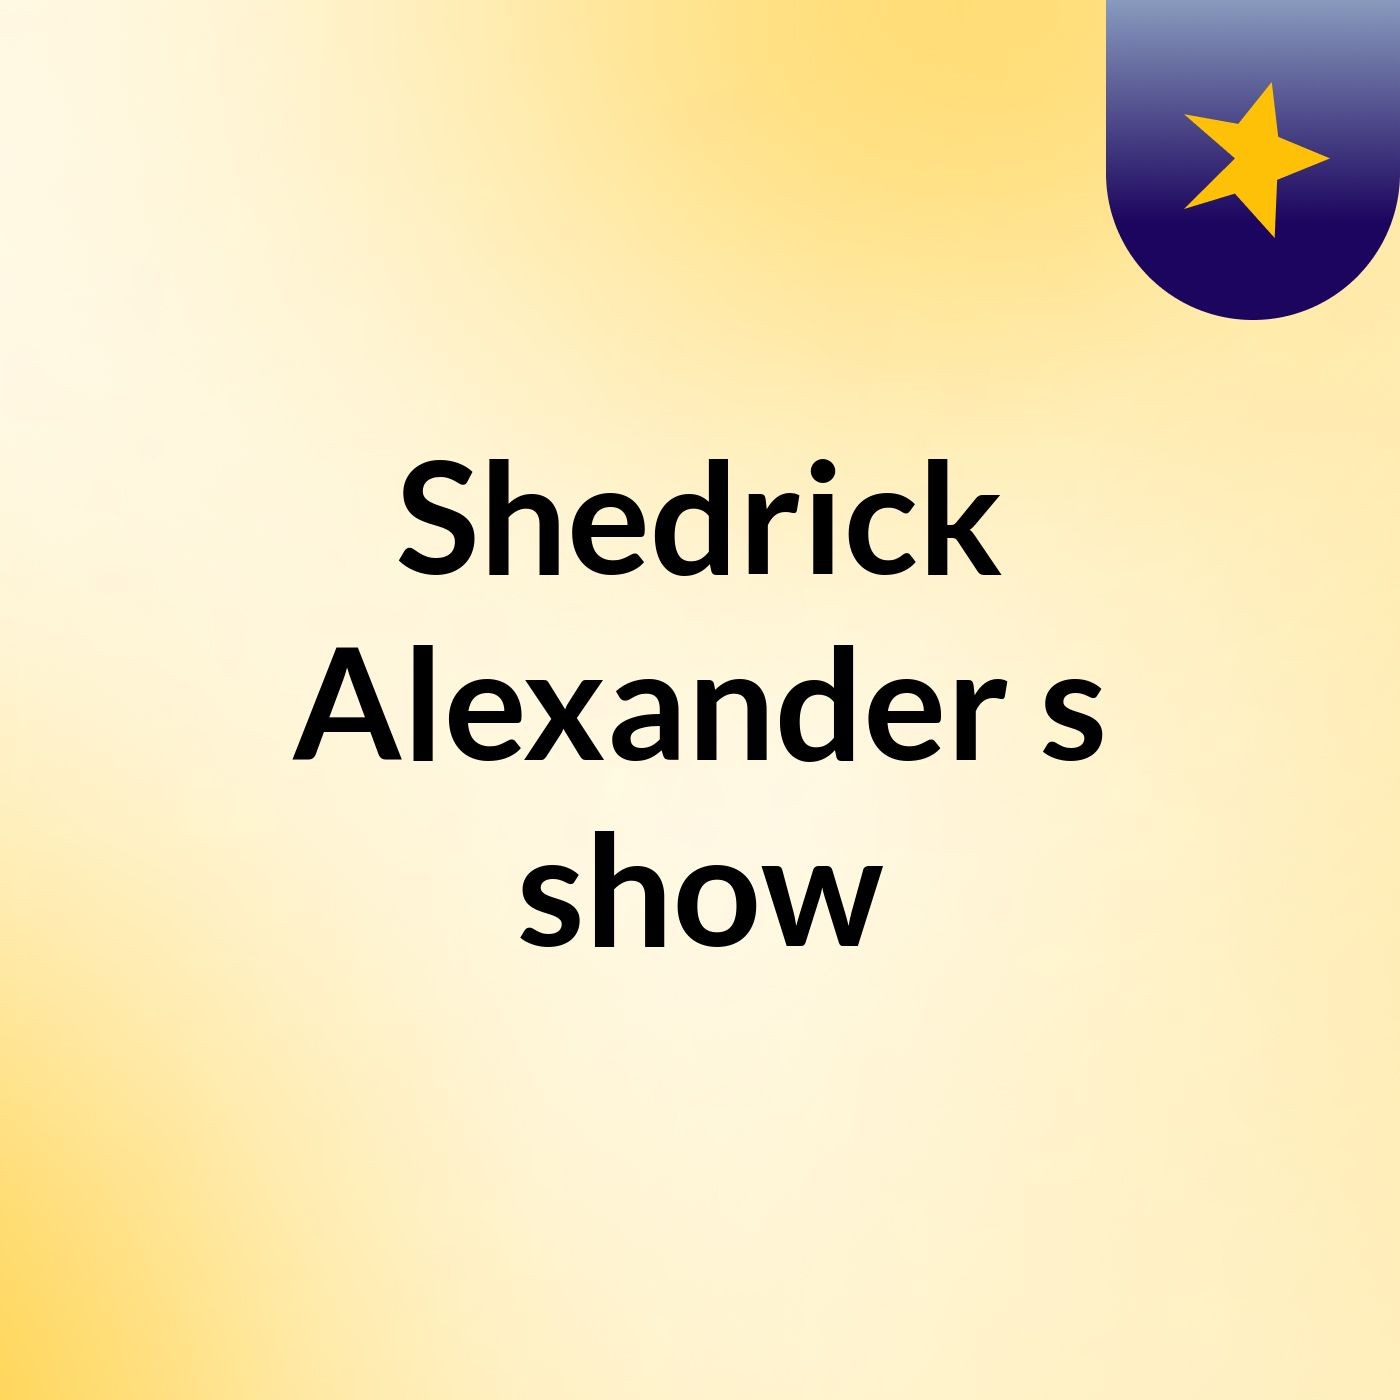 Shedrick Alexander's show